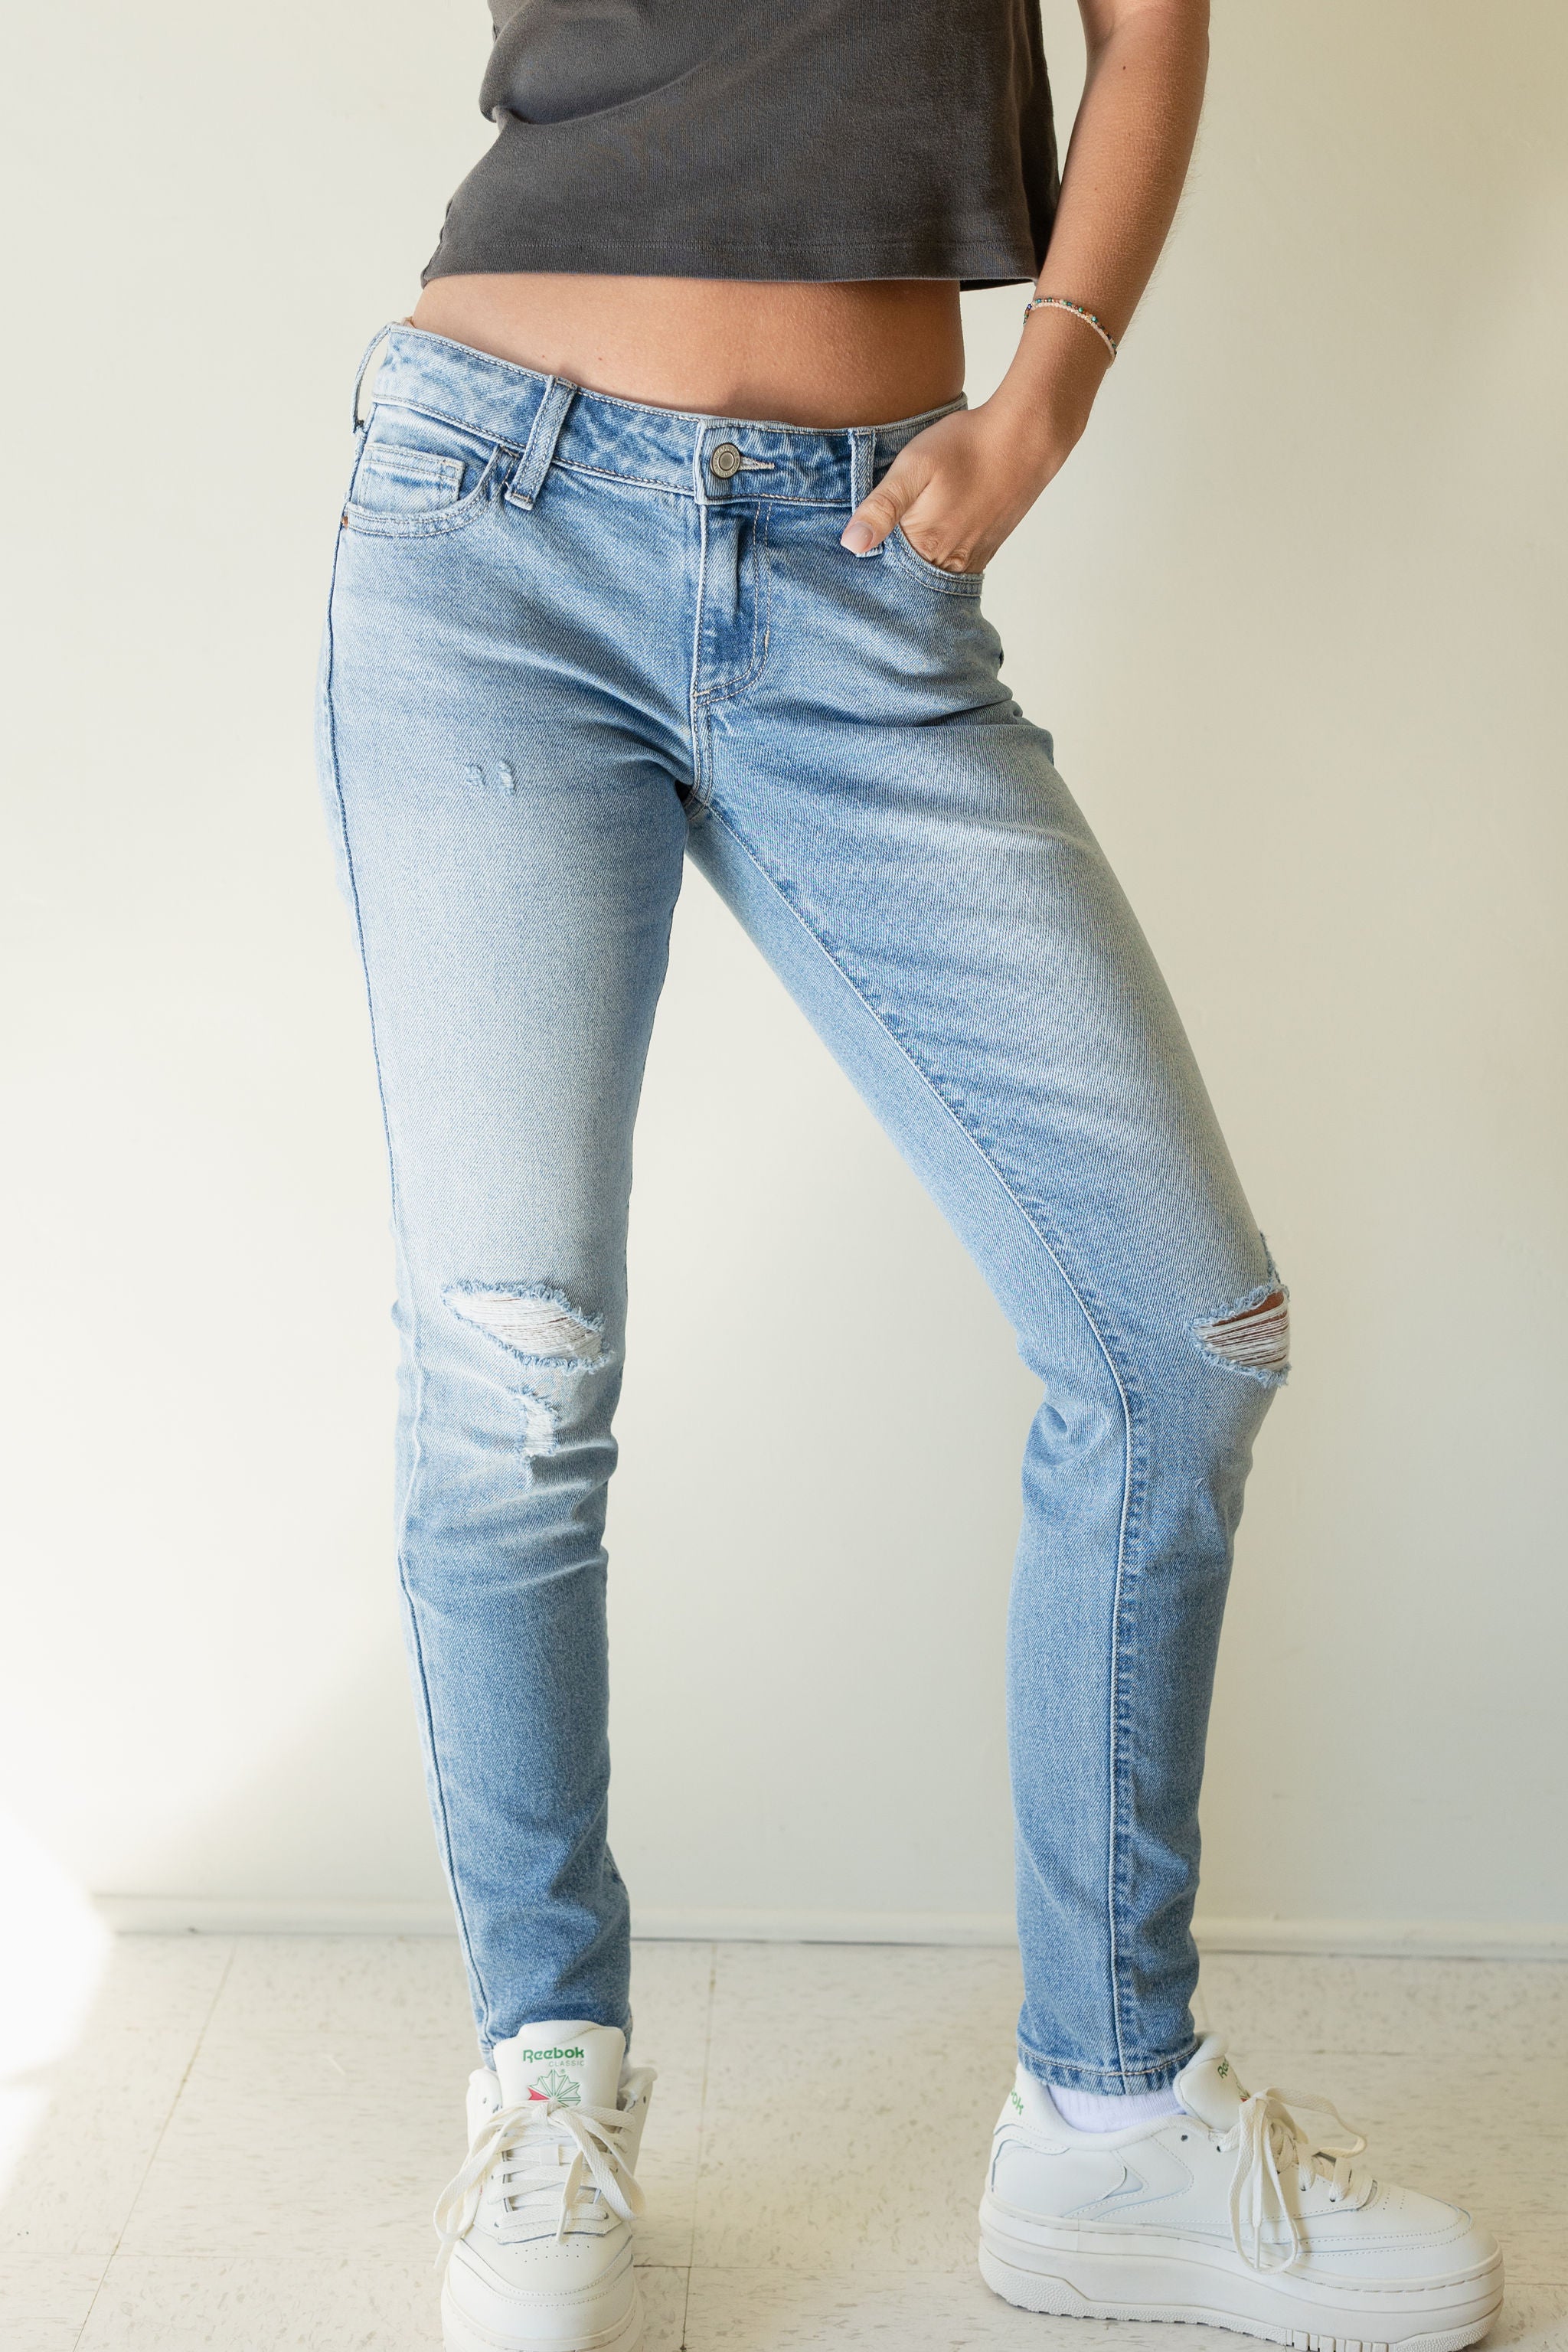 Low Rise Skinny Jeans by Nectar Premium Denim